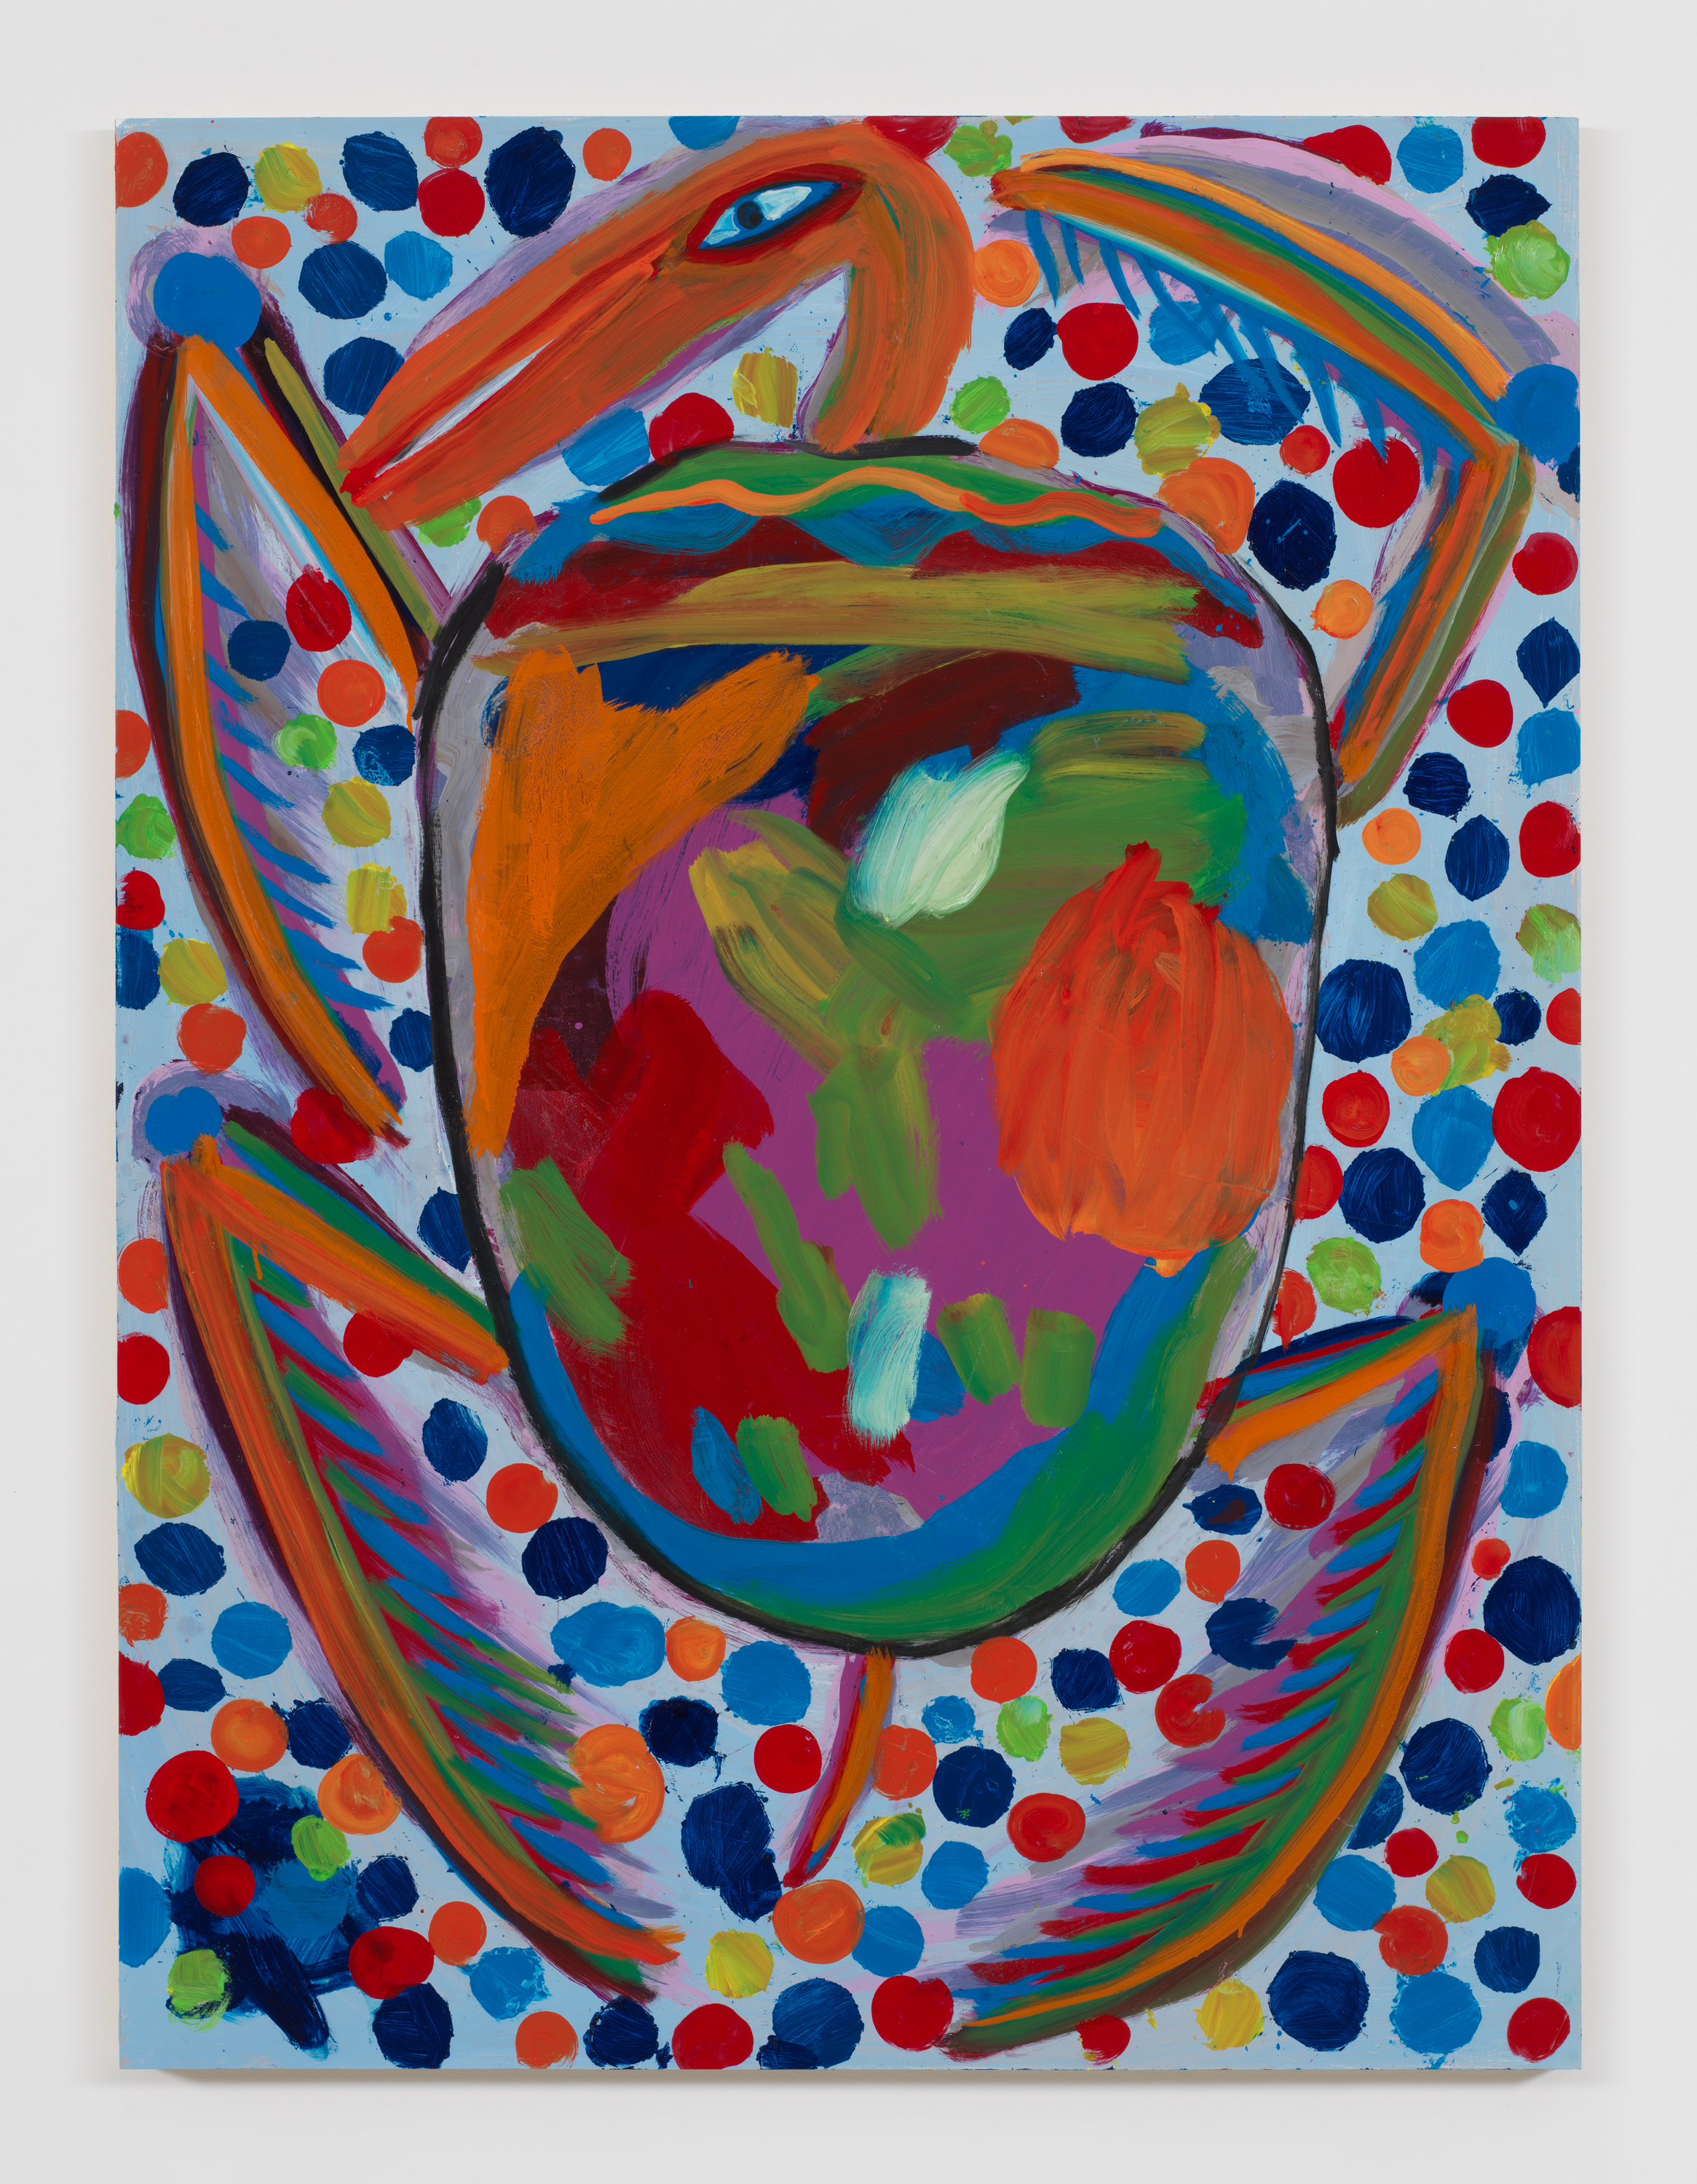   Josh Smith,  Turtle , 2019, Oil on wood panel, 48 x 36 inches, 121.9 x 91.4 cm 